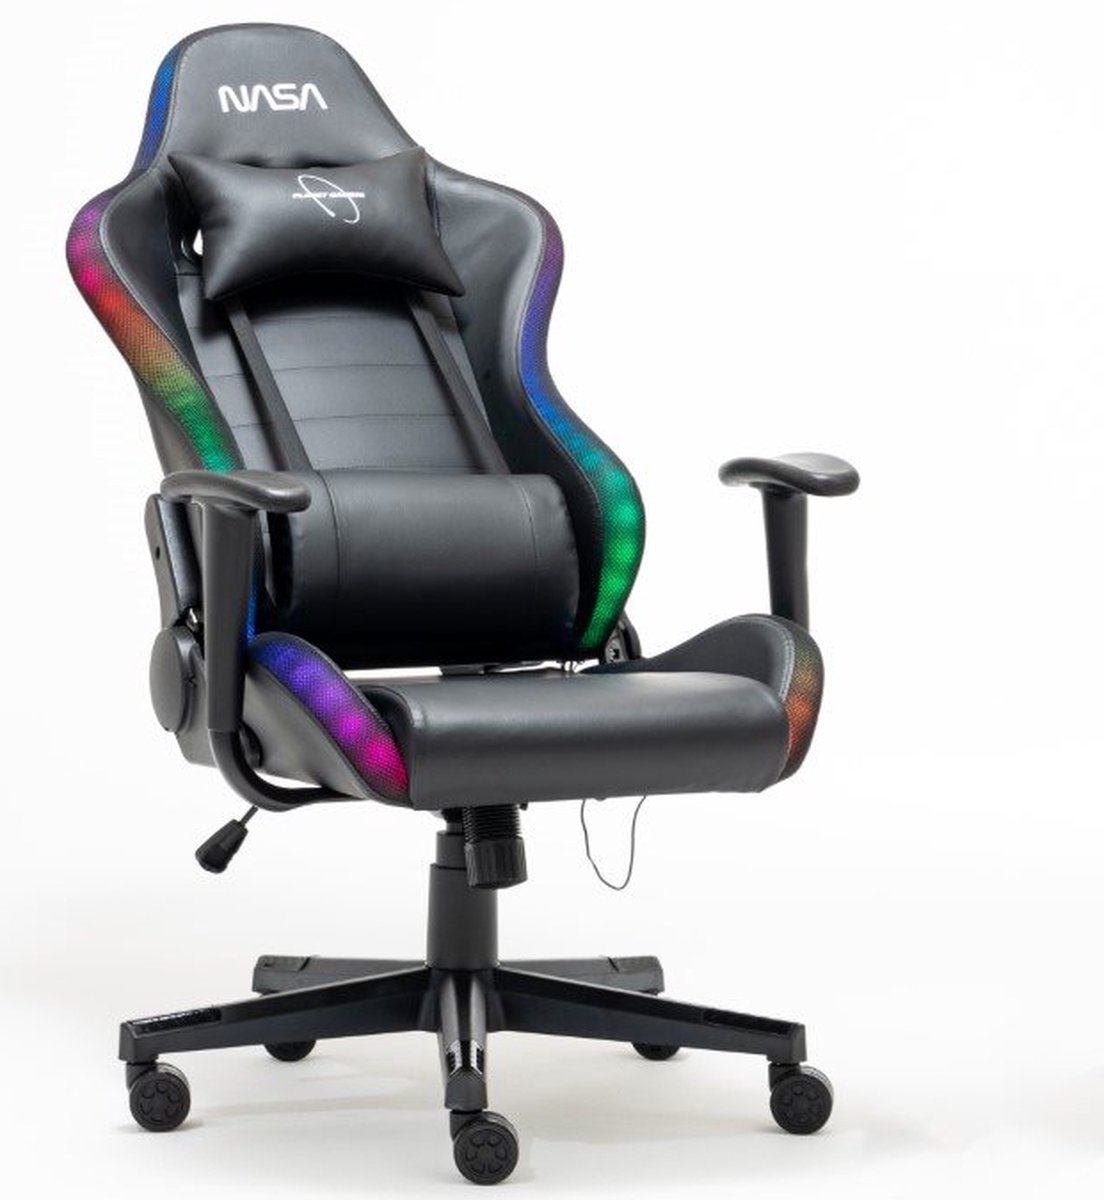 Ranqer Halo - Chaise gamer LED / Chaise gaming RGB - Noir